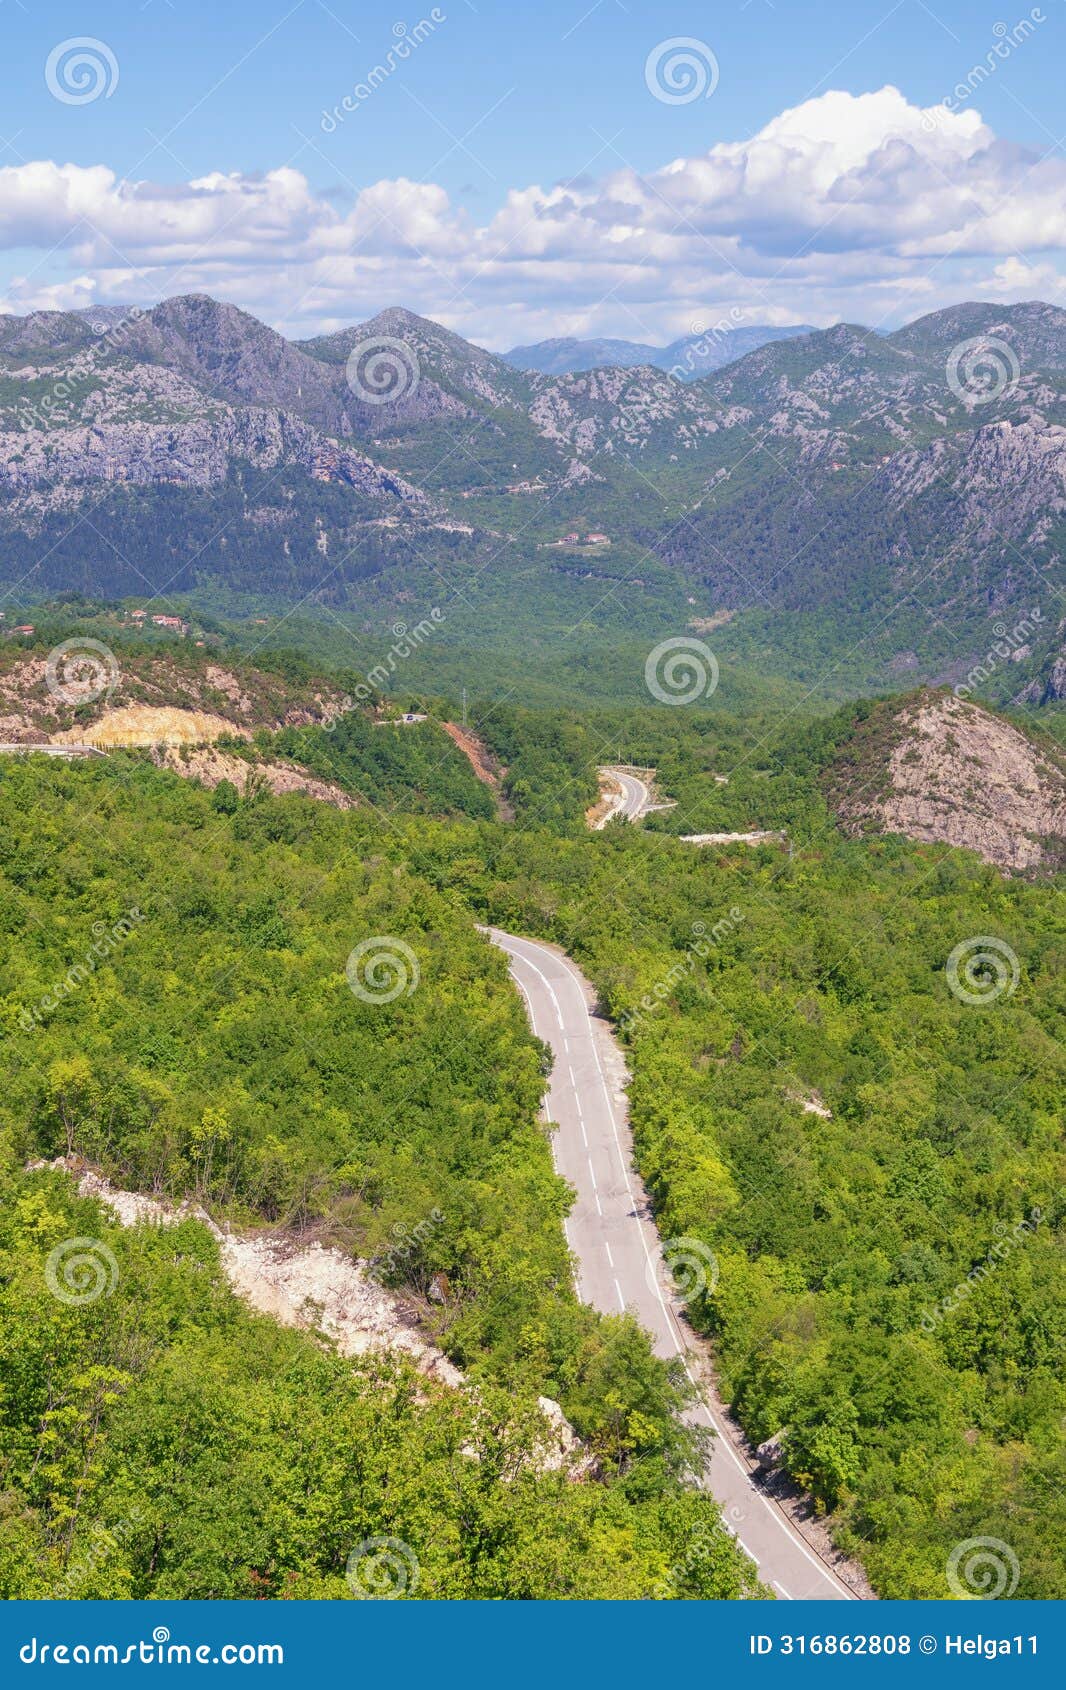 summer mountain landscape. balkans road trip. montenegro, dinaric alps